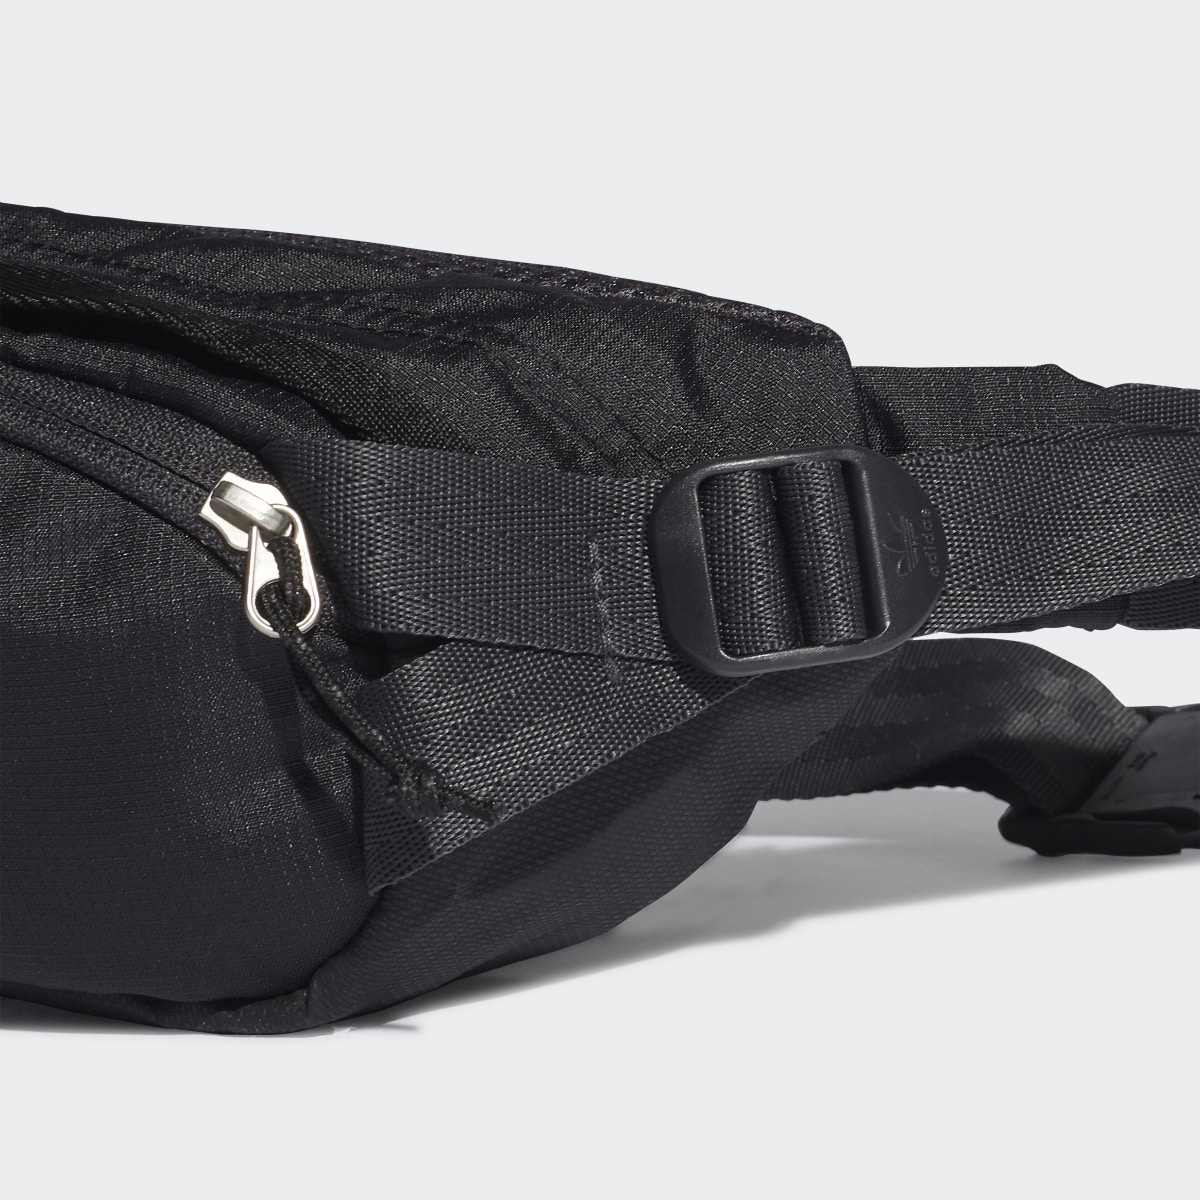 Adidas Adventure Waist Bag Small. 6